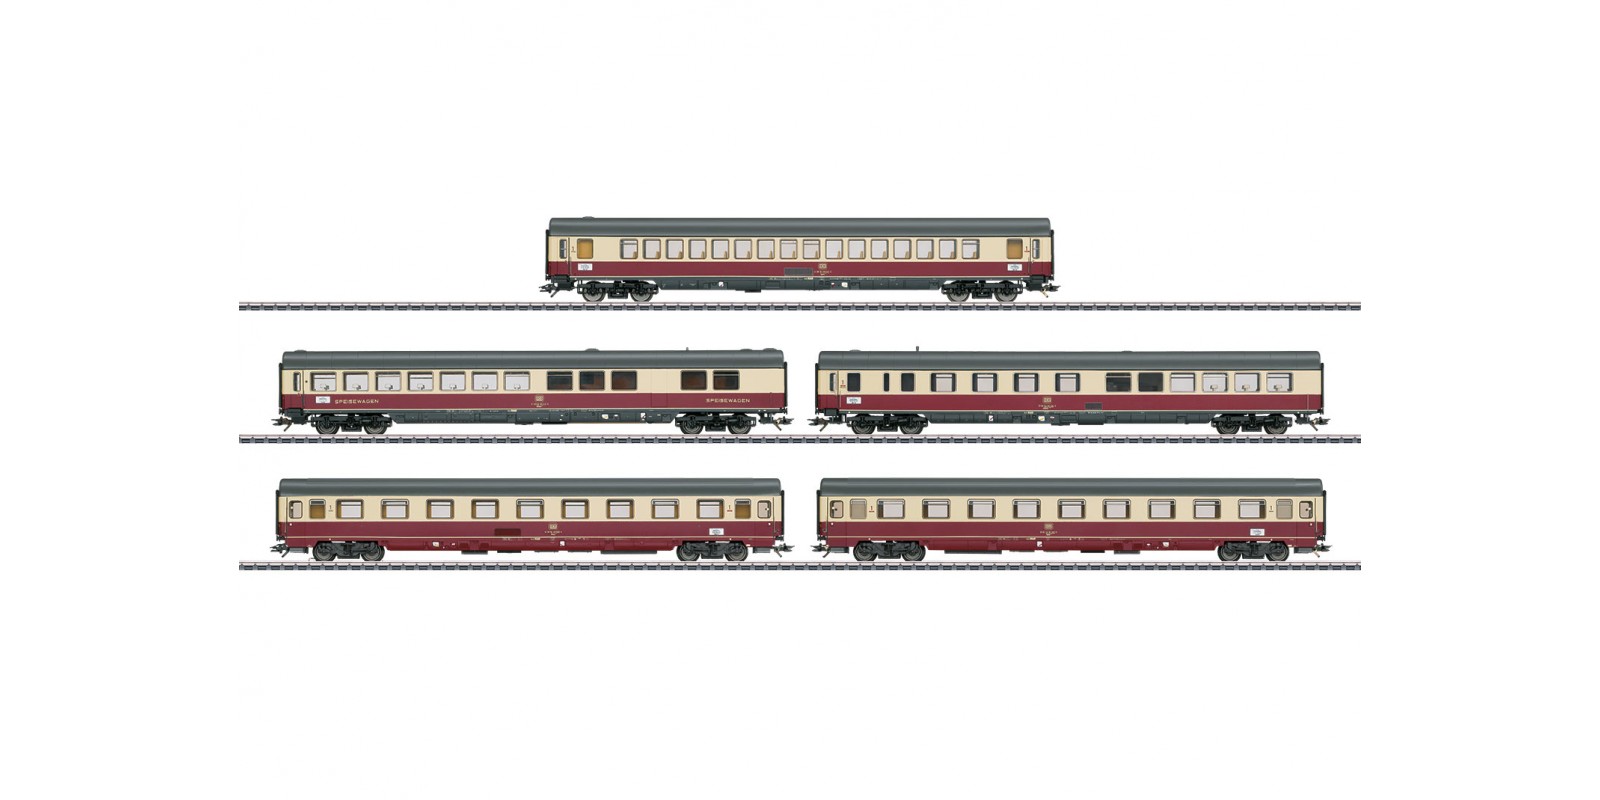  43856 TEE 32 Parsifal Express Train Passenger Car Set